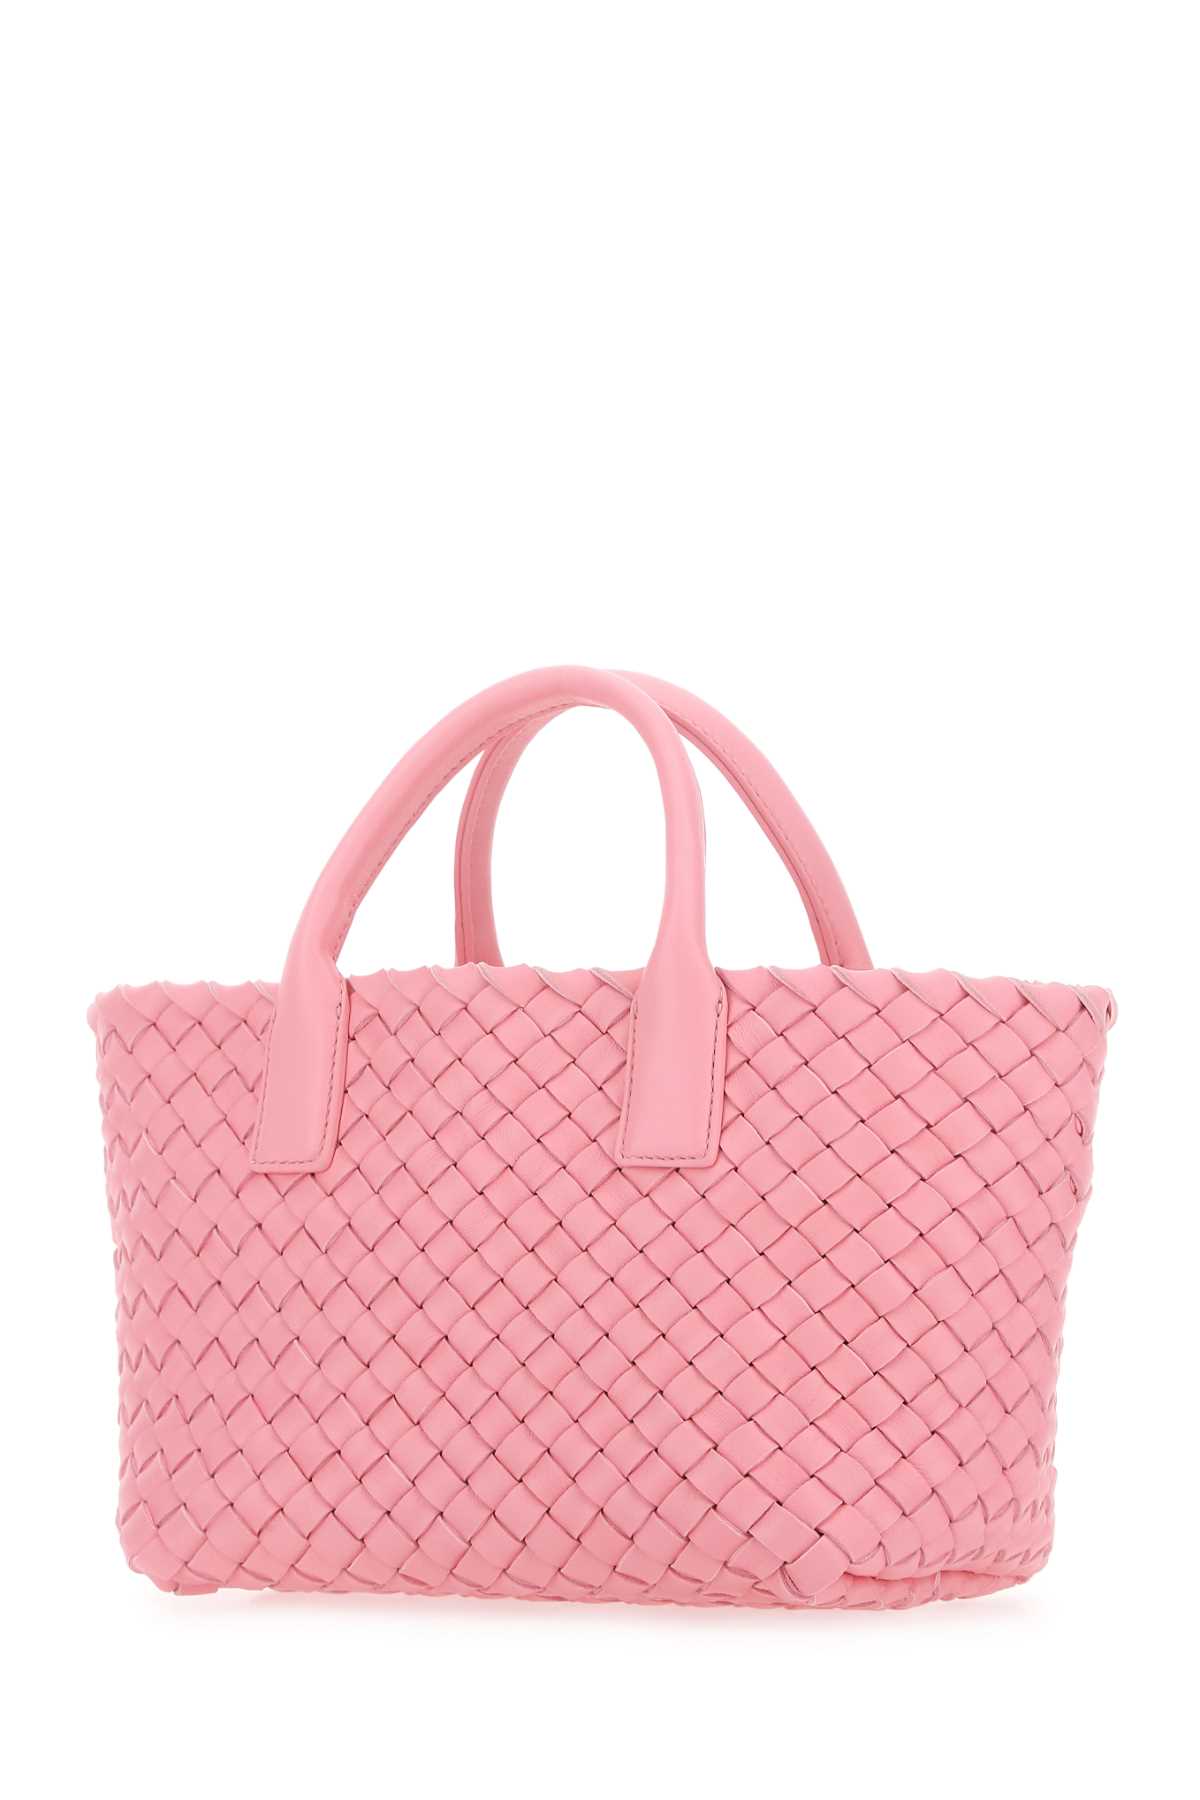 Bottega Veneta Pink Leather Mini Cabat Handbag In 5832